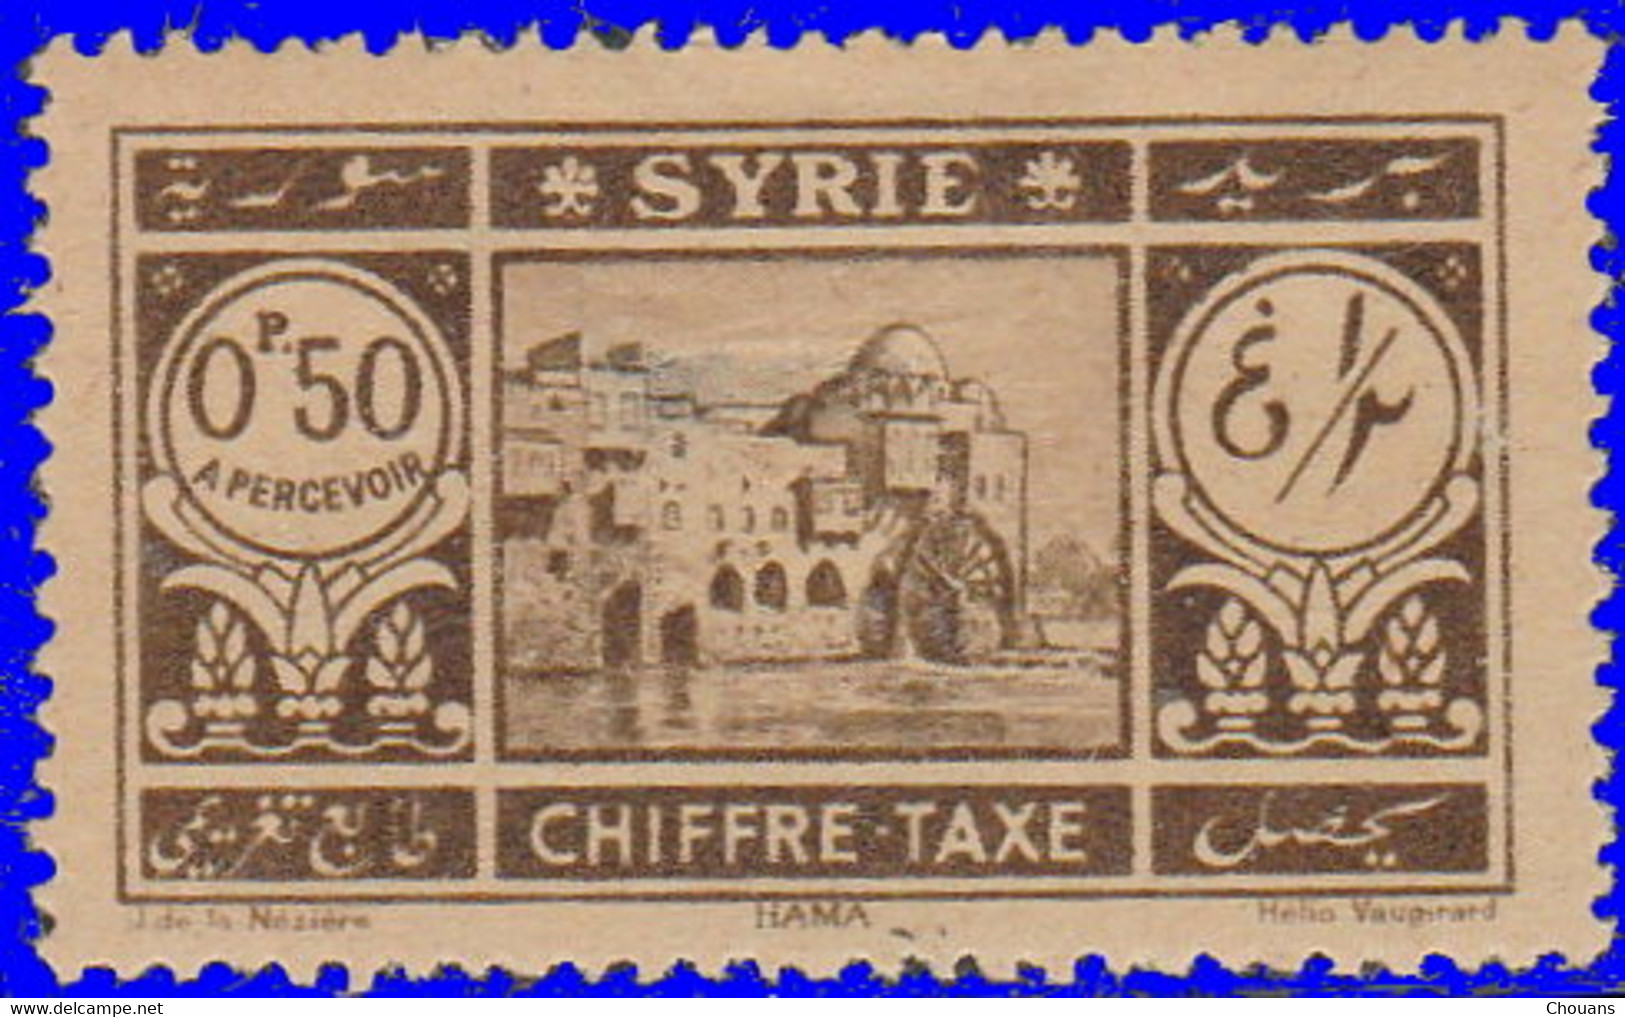 Syrie Taxe 1925. ~ T 32* - Hama - Portomarken